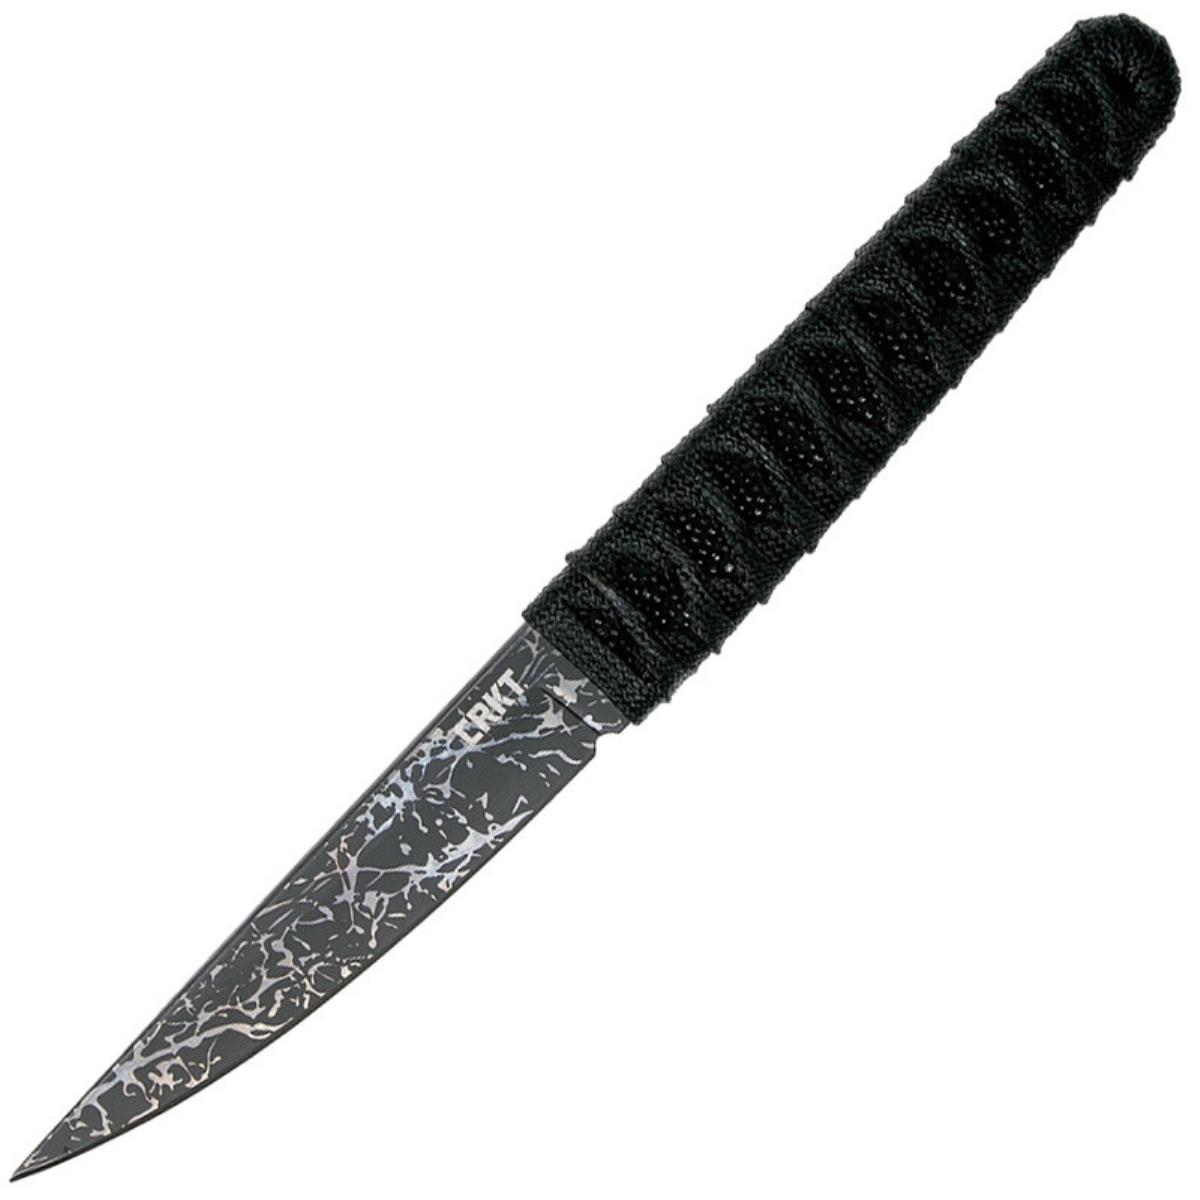 Нож Obake с фикс. клинком, рук-ть паракорд, клинок 8Cr14MoV, пластик. ножны  CRKT_2367 трость с клинком скрудж